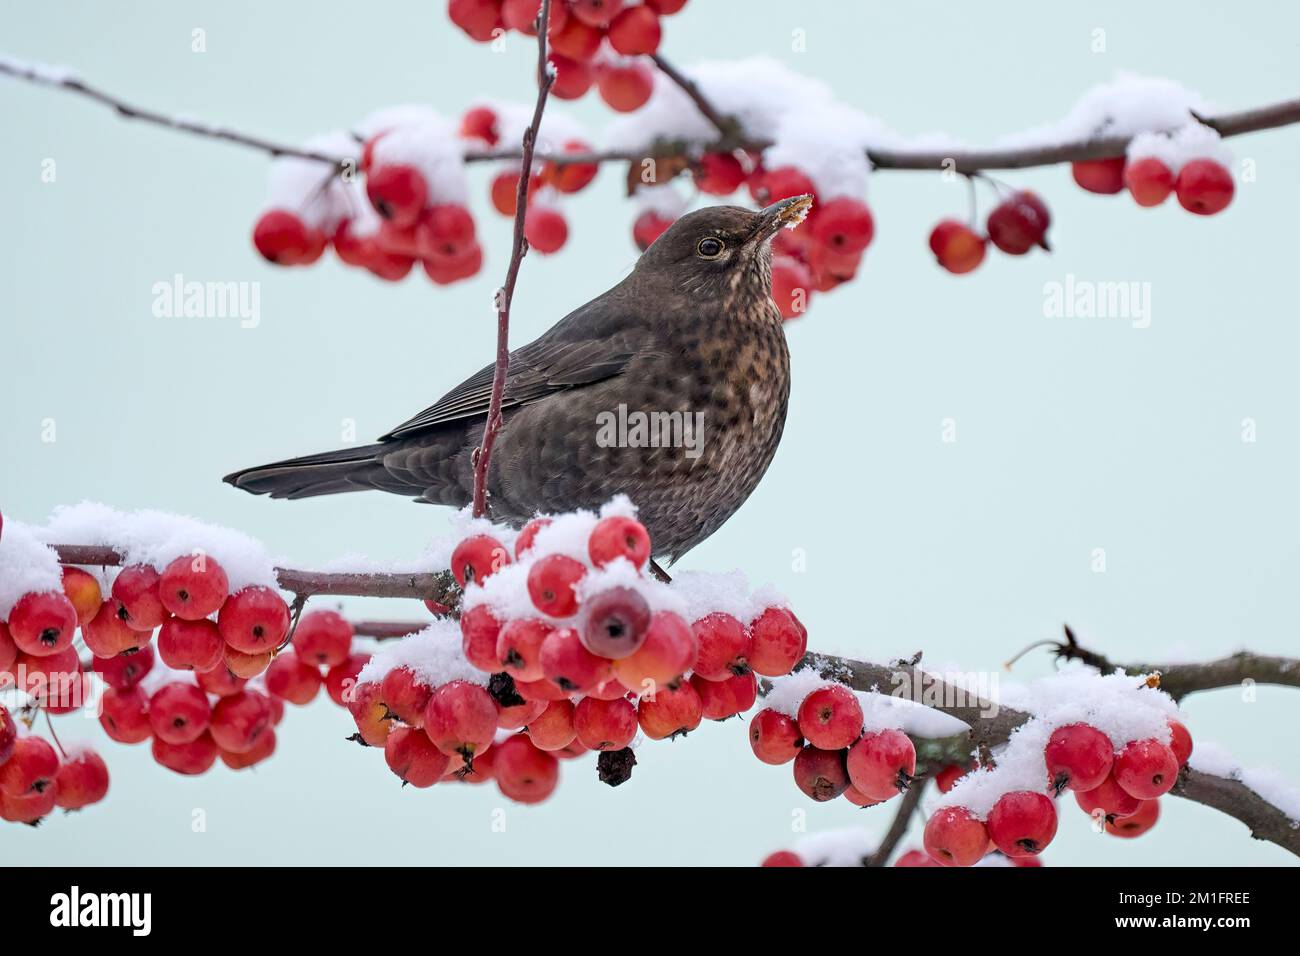 blackbird, Turdus Merula, sitting on an ornamental apple tree in fresh powder snow Stock Photo